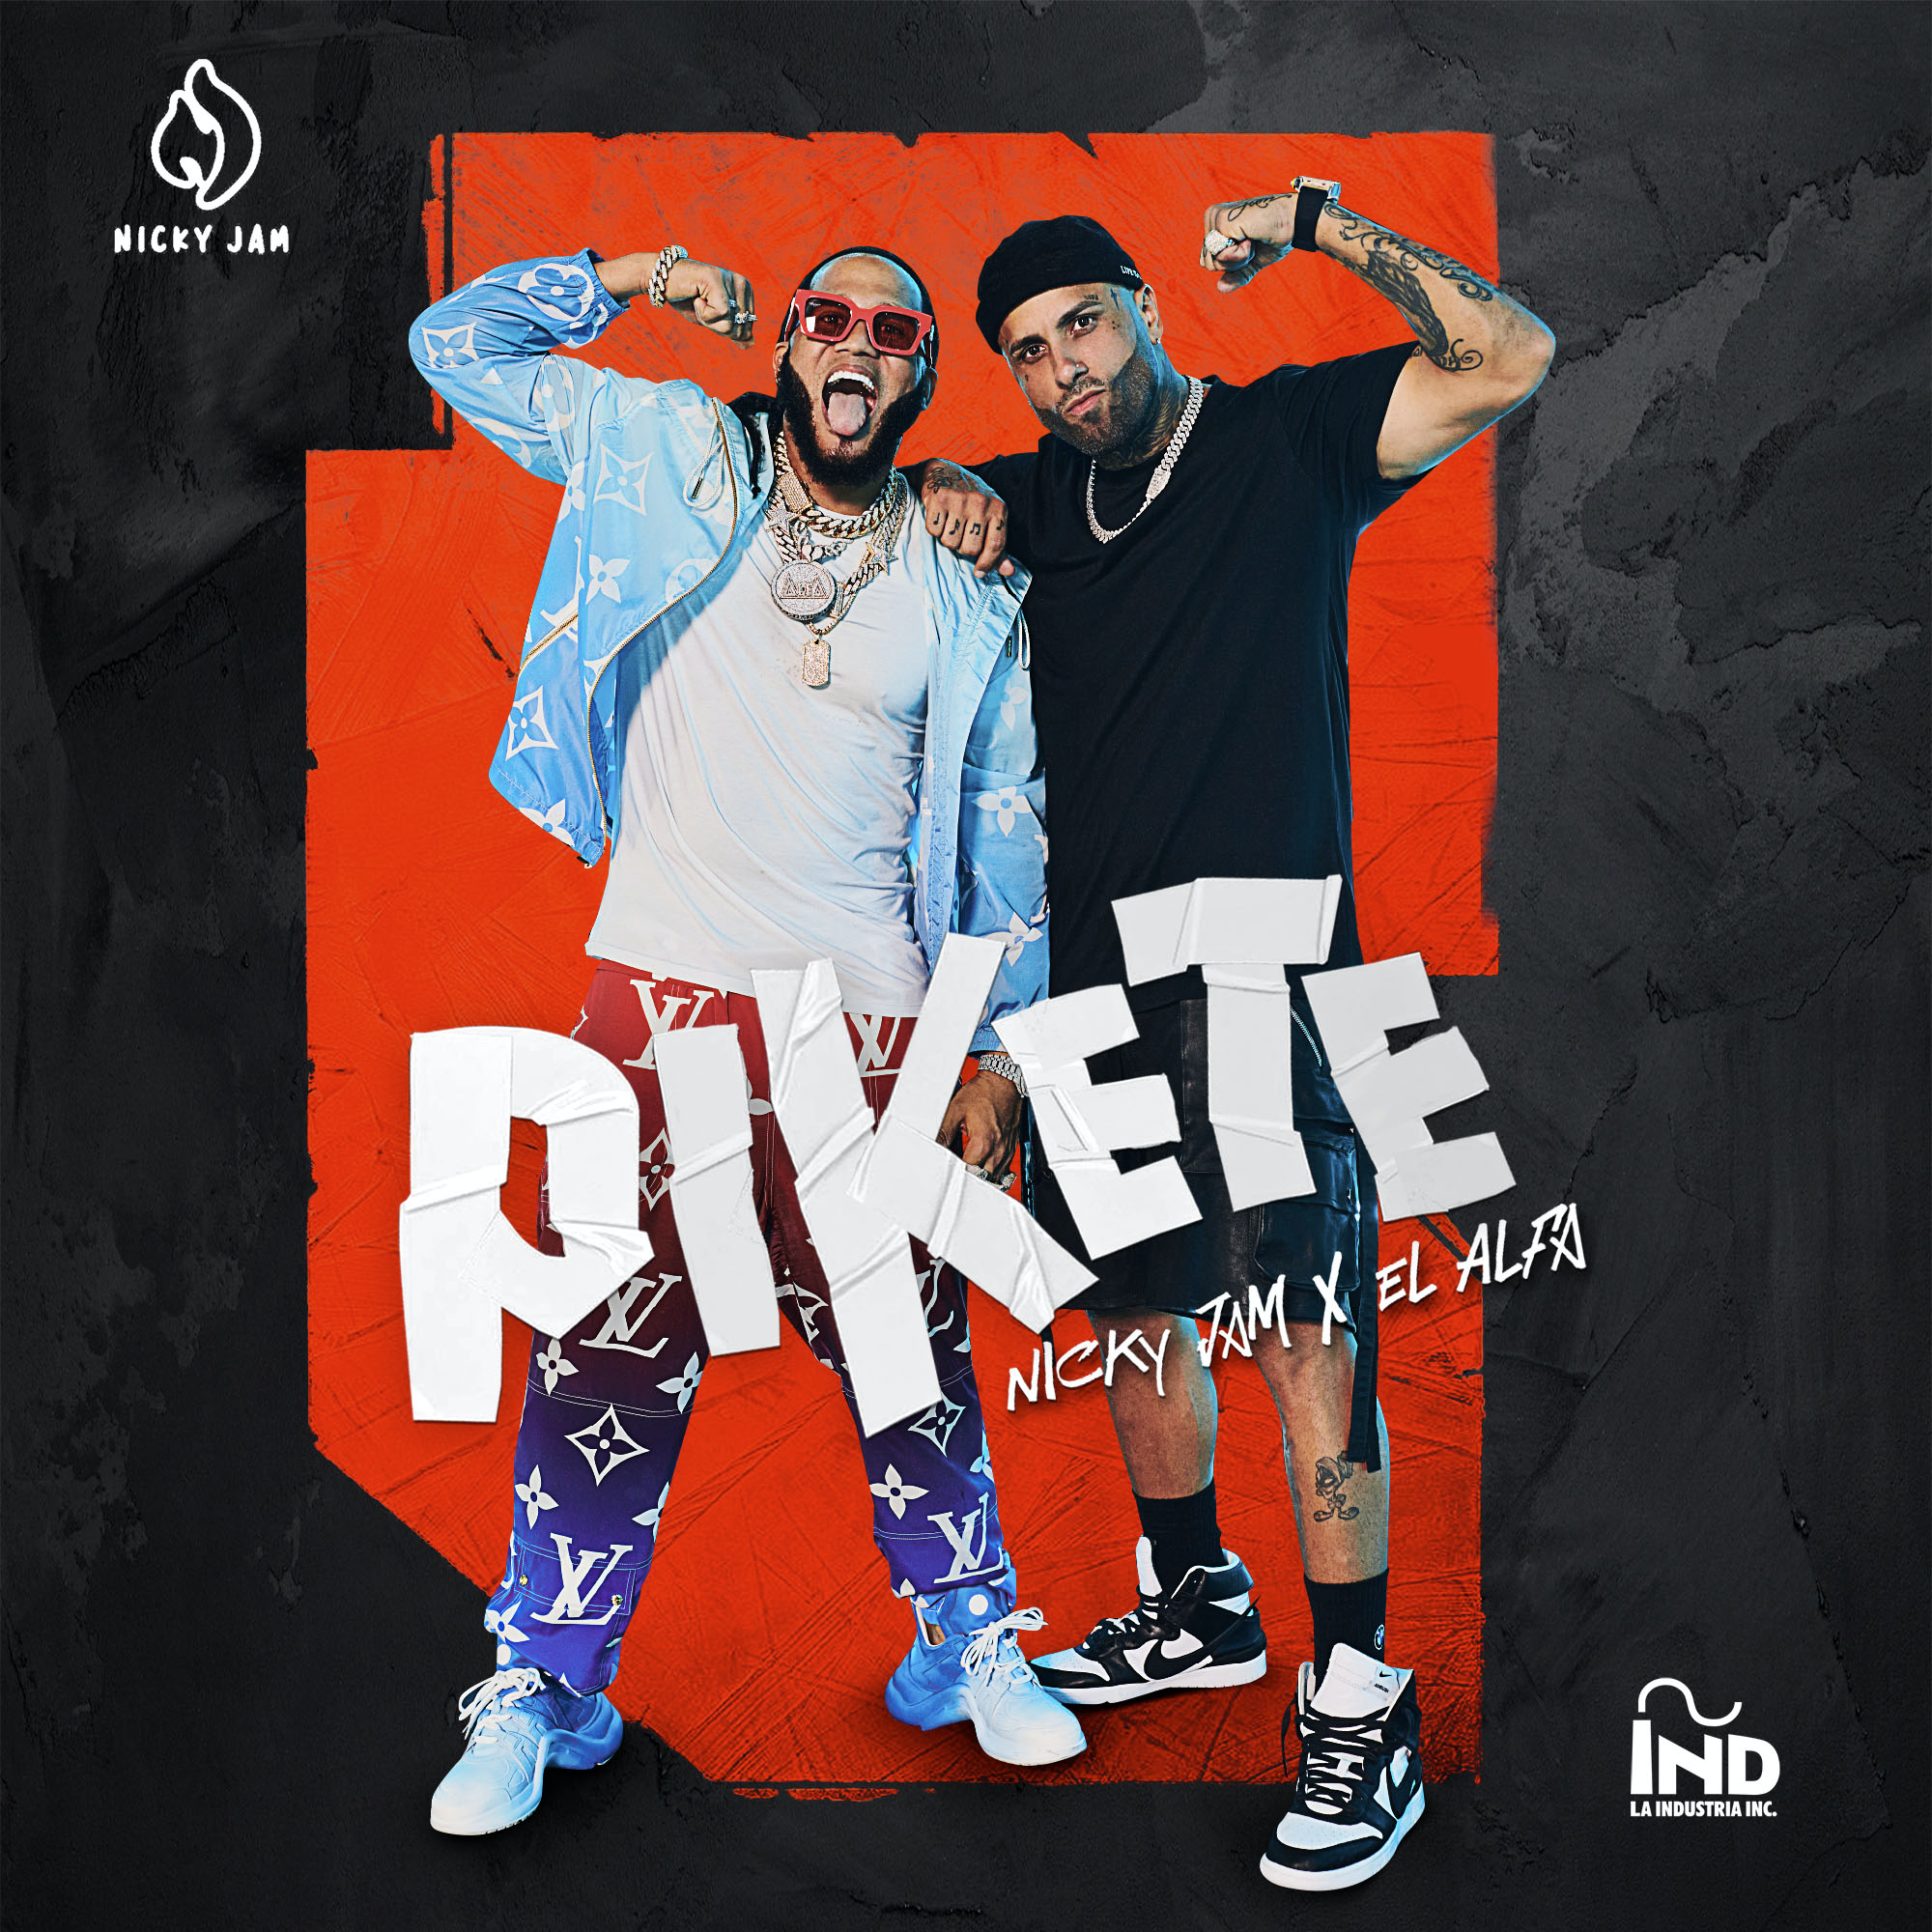 Nicky Jam Drops New Single “PIKETE” Feat. El Alfa